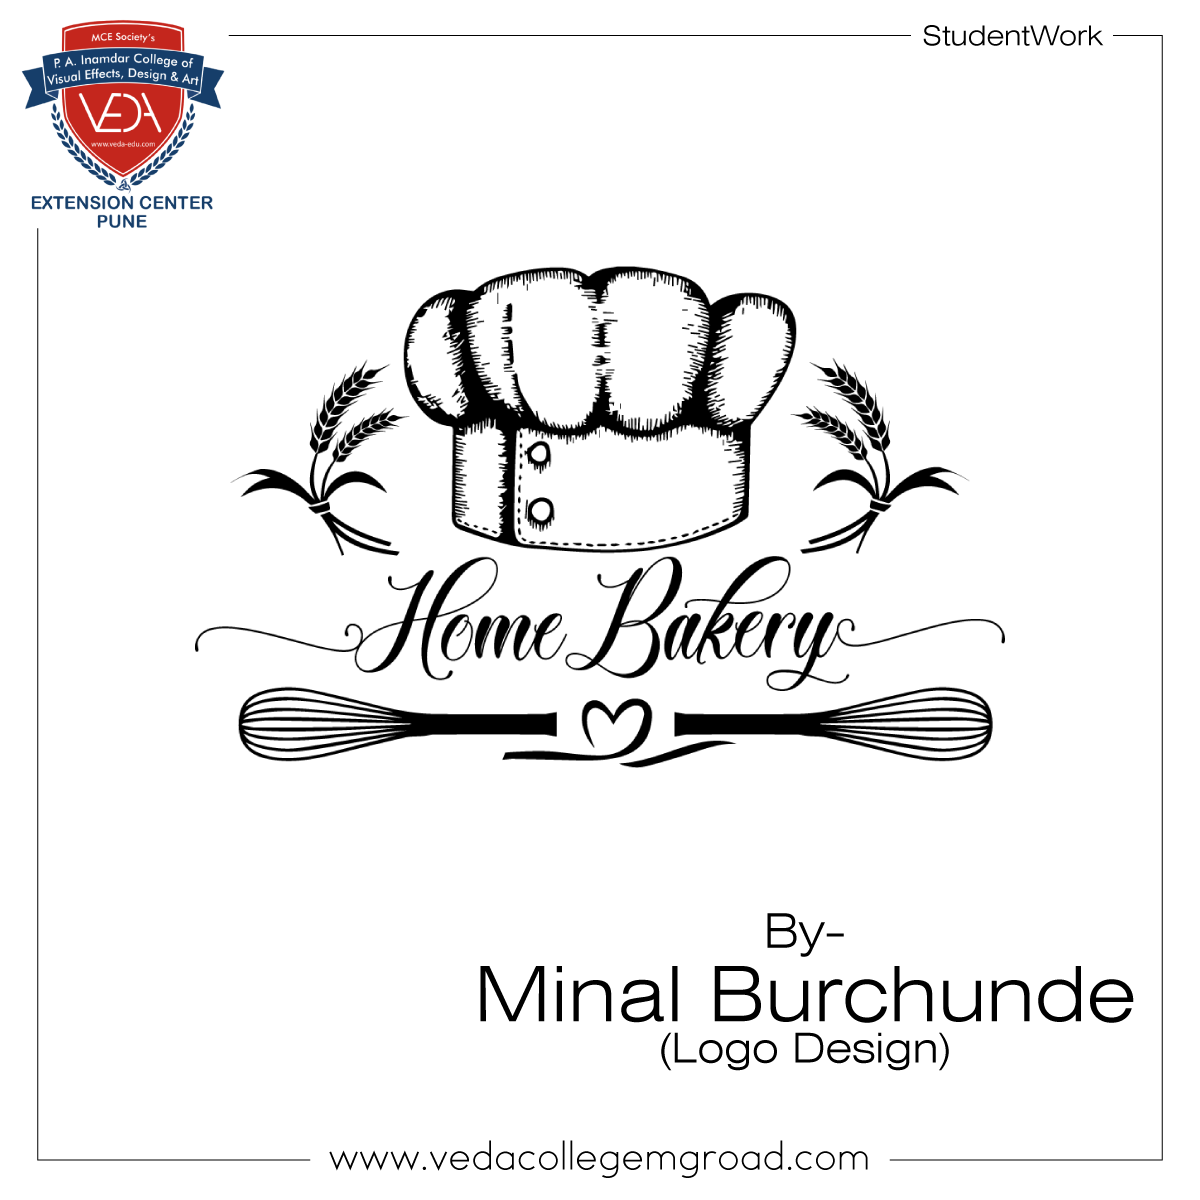 Minal-Burchunde-(-Logo-Design-)